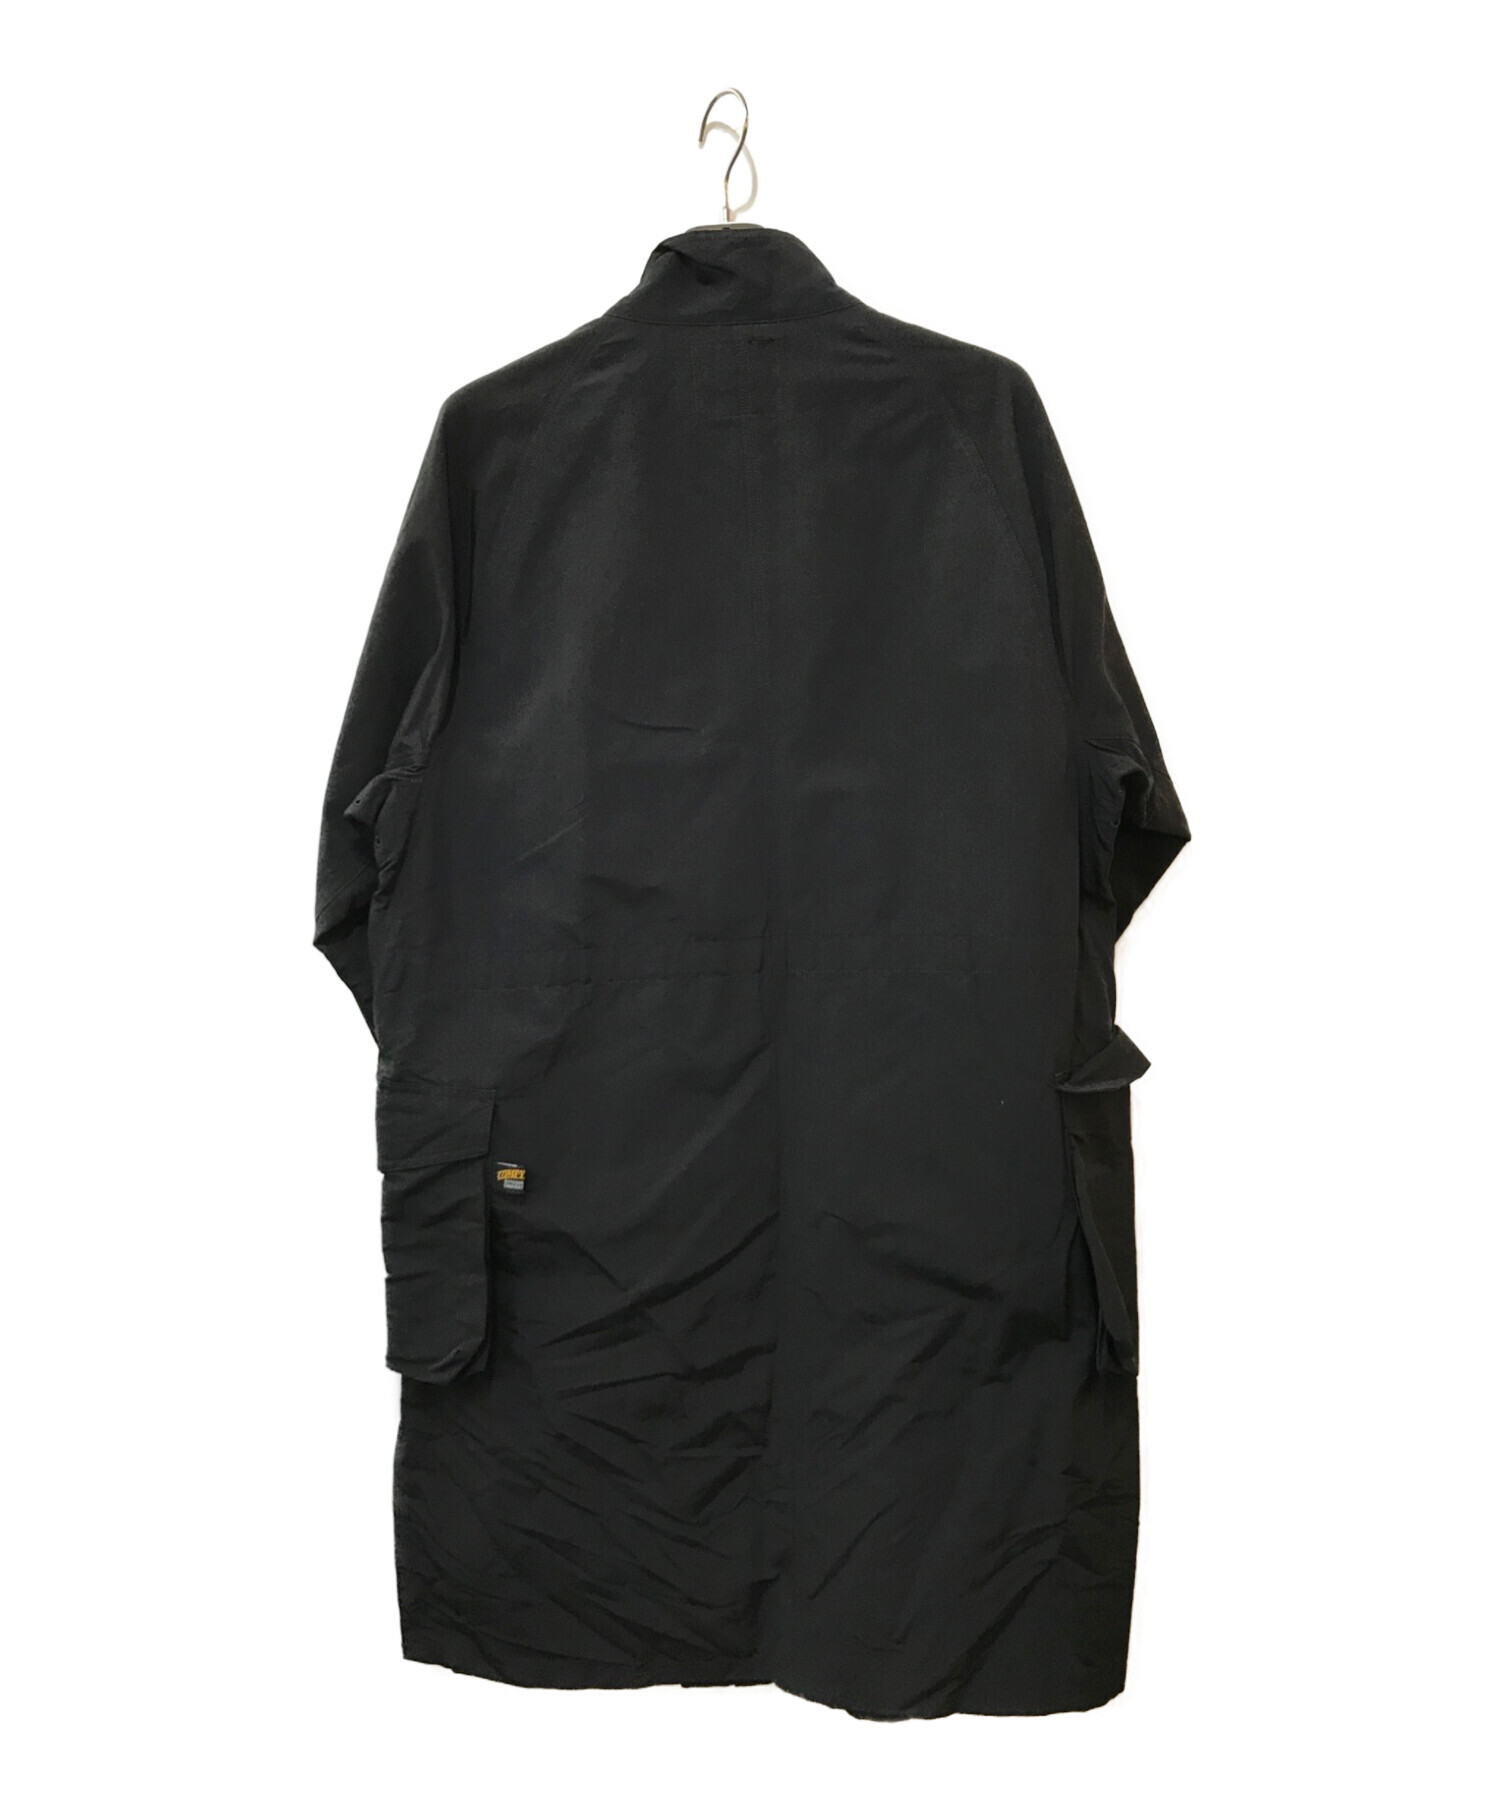 Comfy Outdoor Garment (コンフィーアウトドアガーメント) EXPLORING COAT ブラック サイズ:S